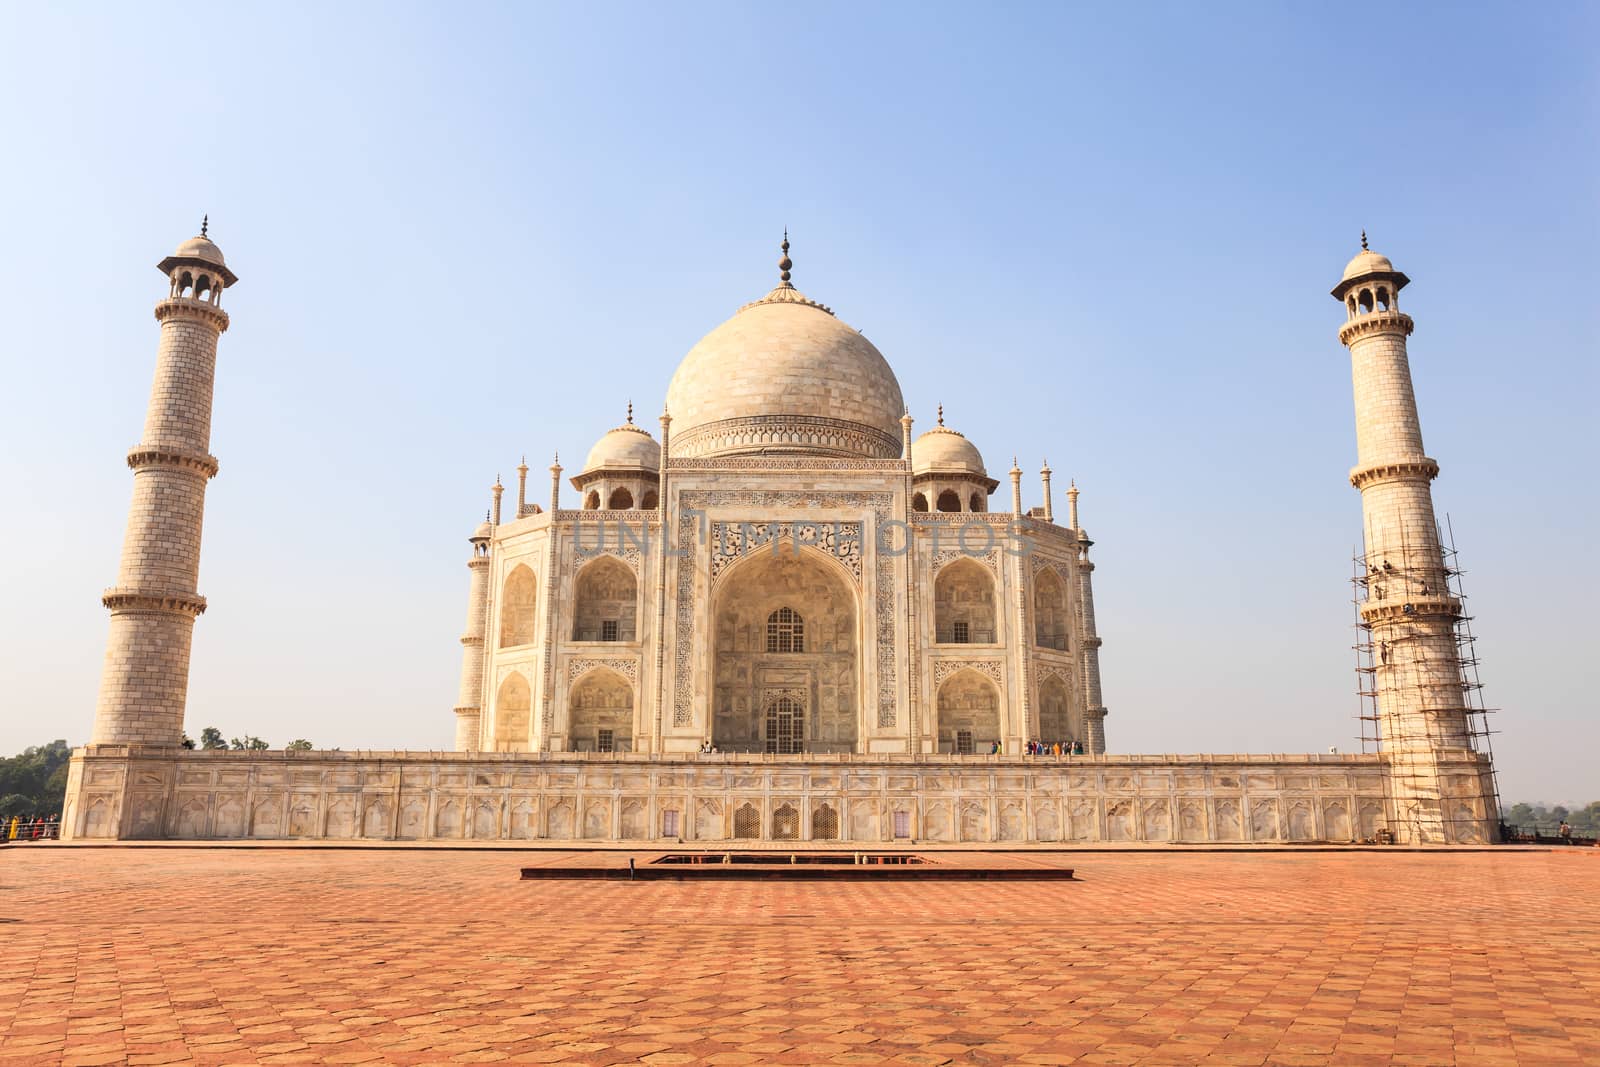 Taj Mahal, the white marble mausoleum in Agra, India